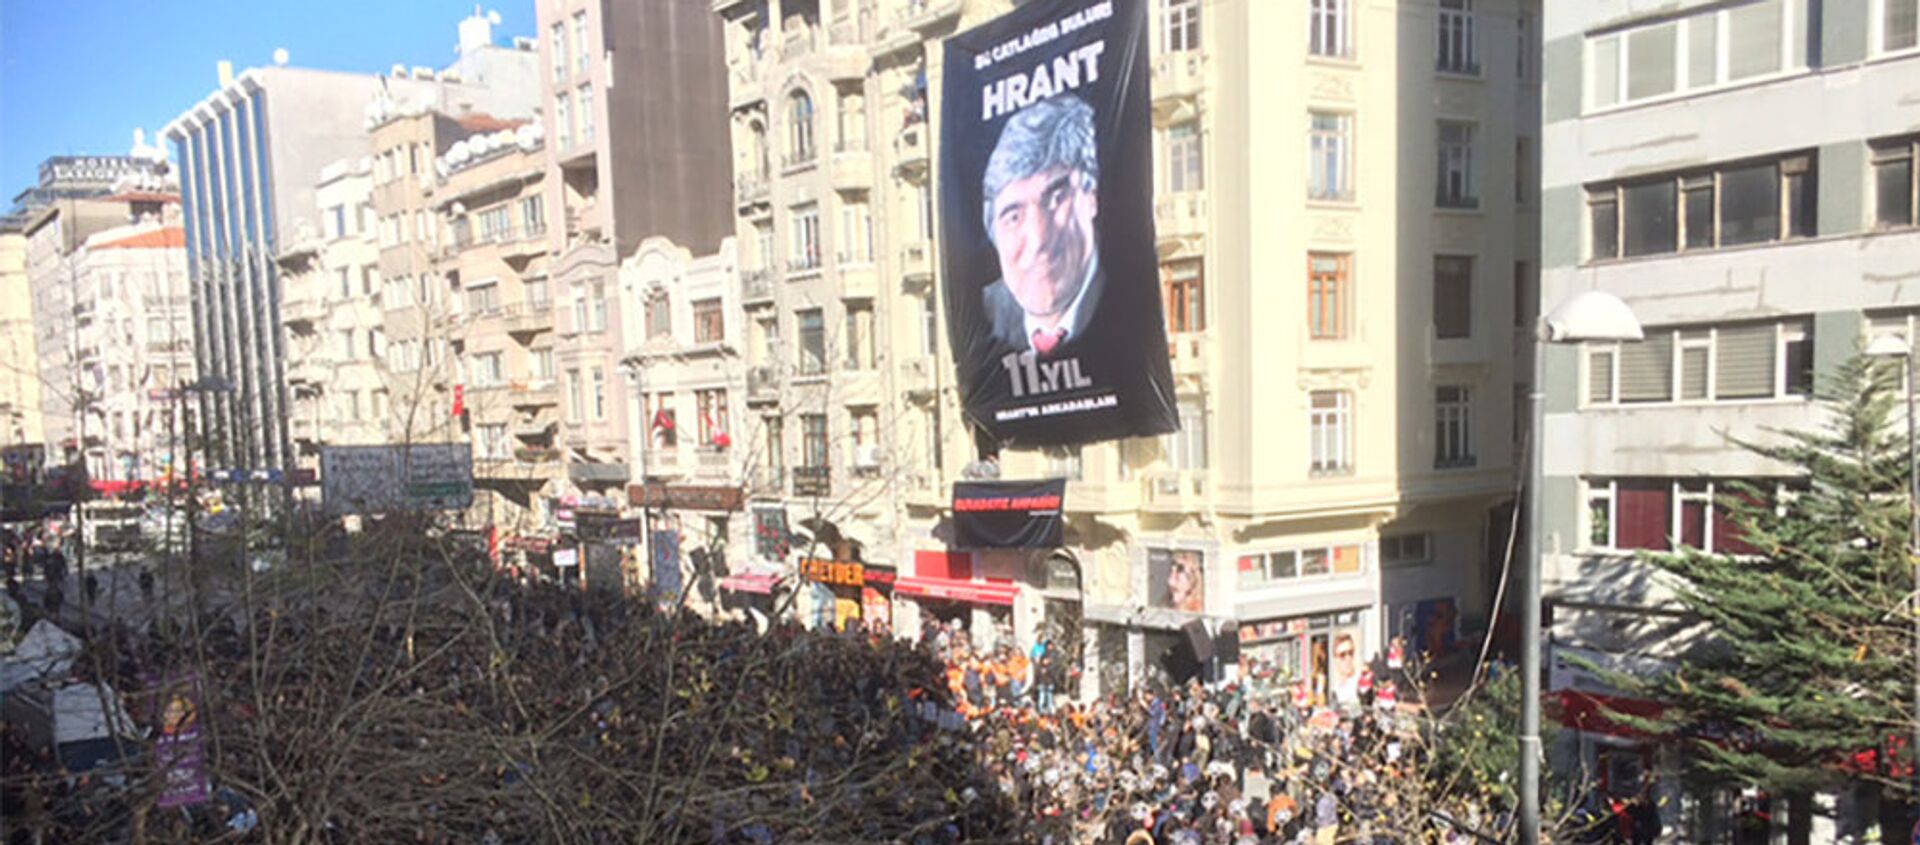 Тысячи людей в Стамбуле отдали дань памяти Гранту Динку - Sputnik Արմենիա, 1920, 19.01.2021